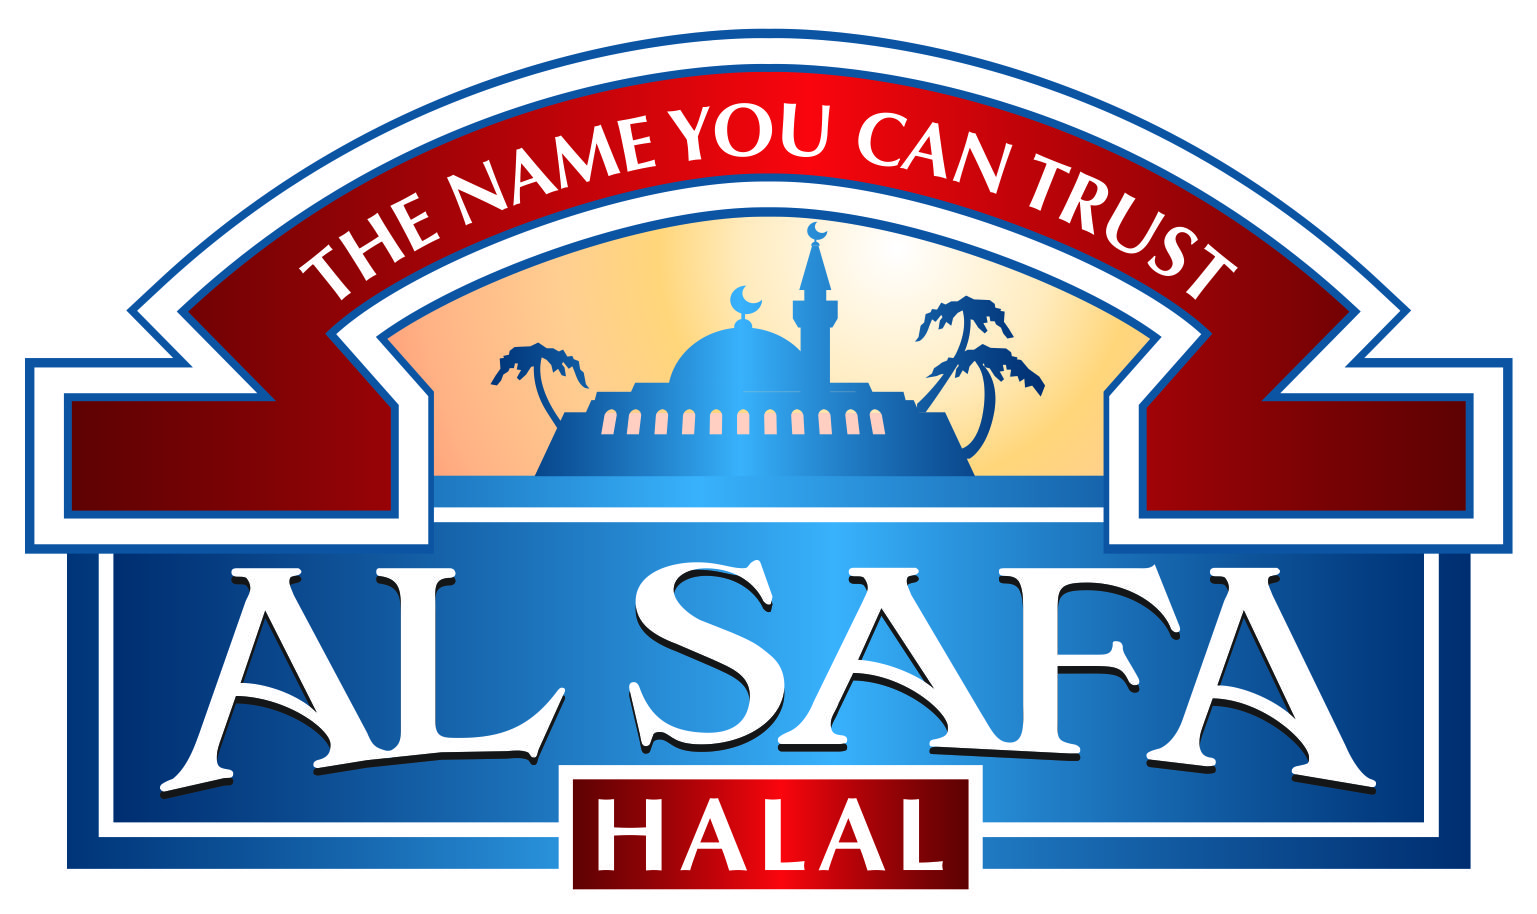 Al Safa Halal